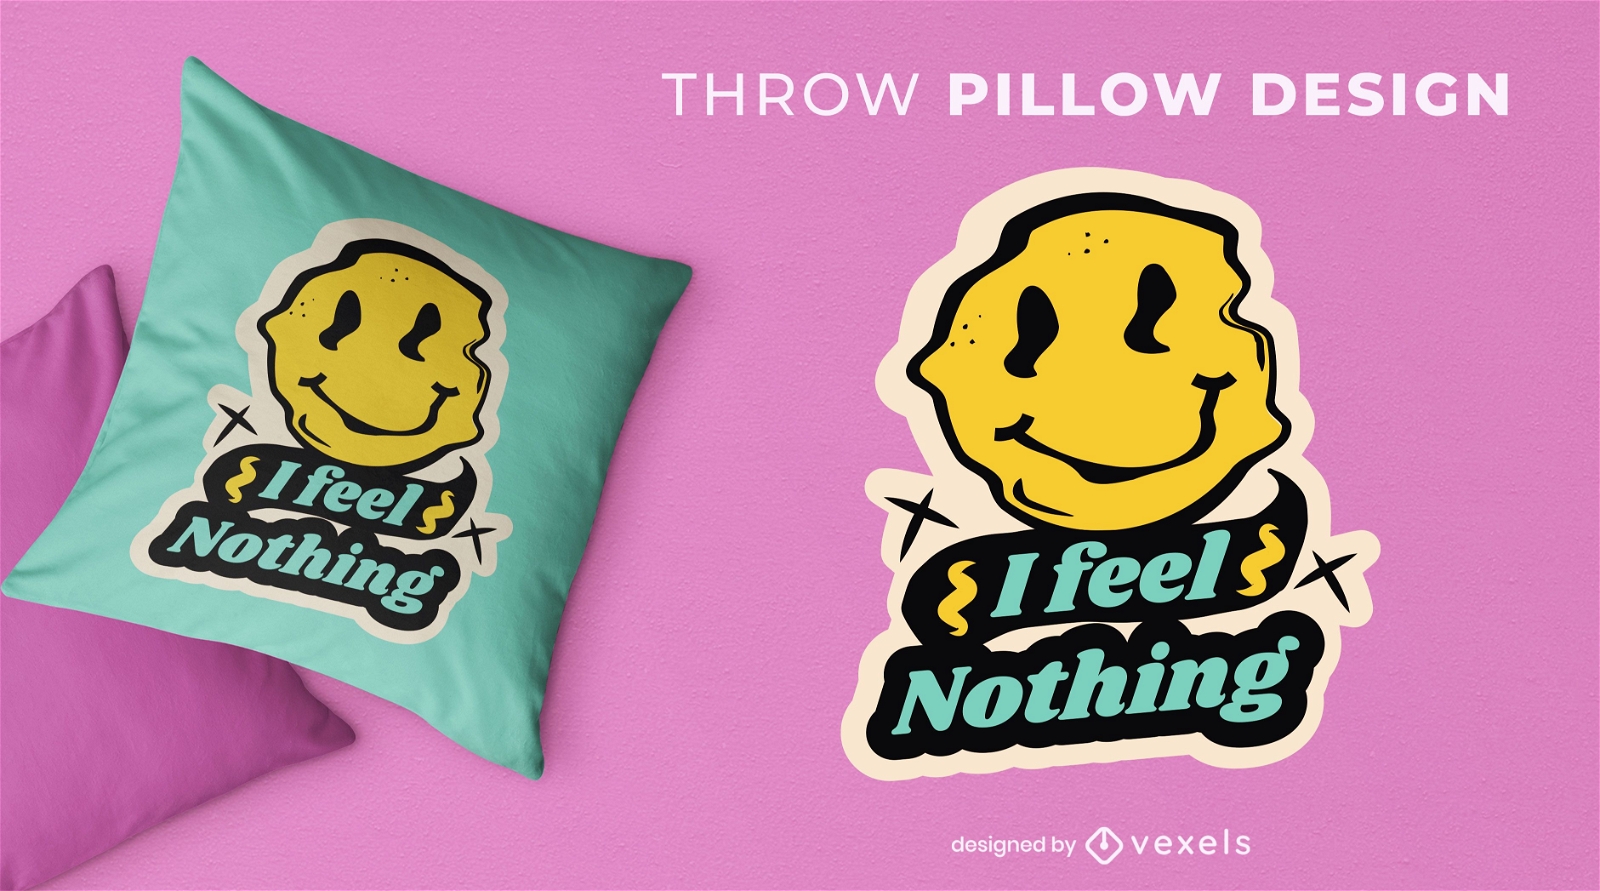 I feel nothing throw pillow design